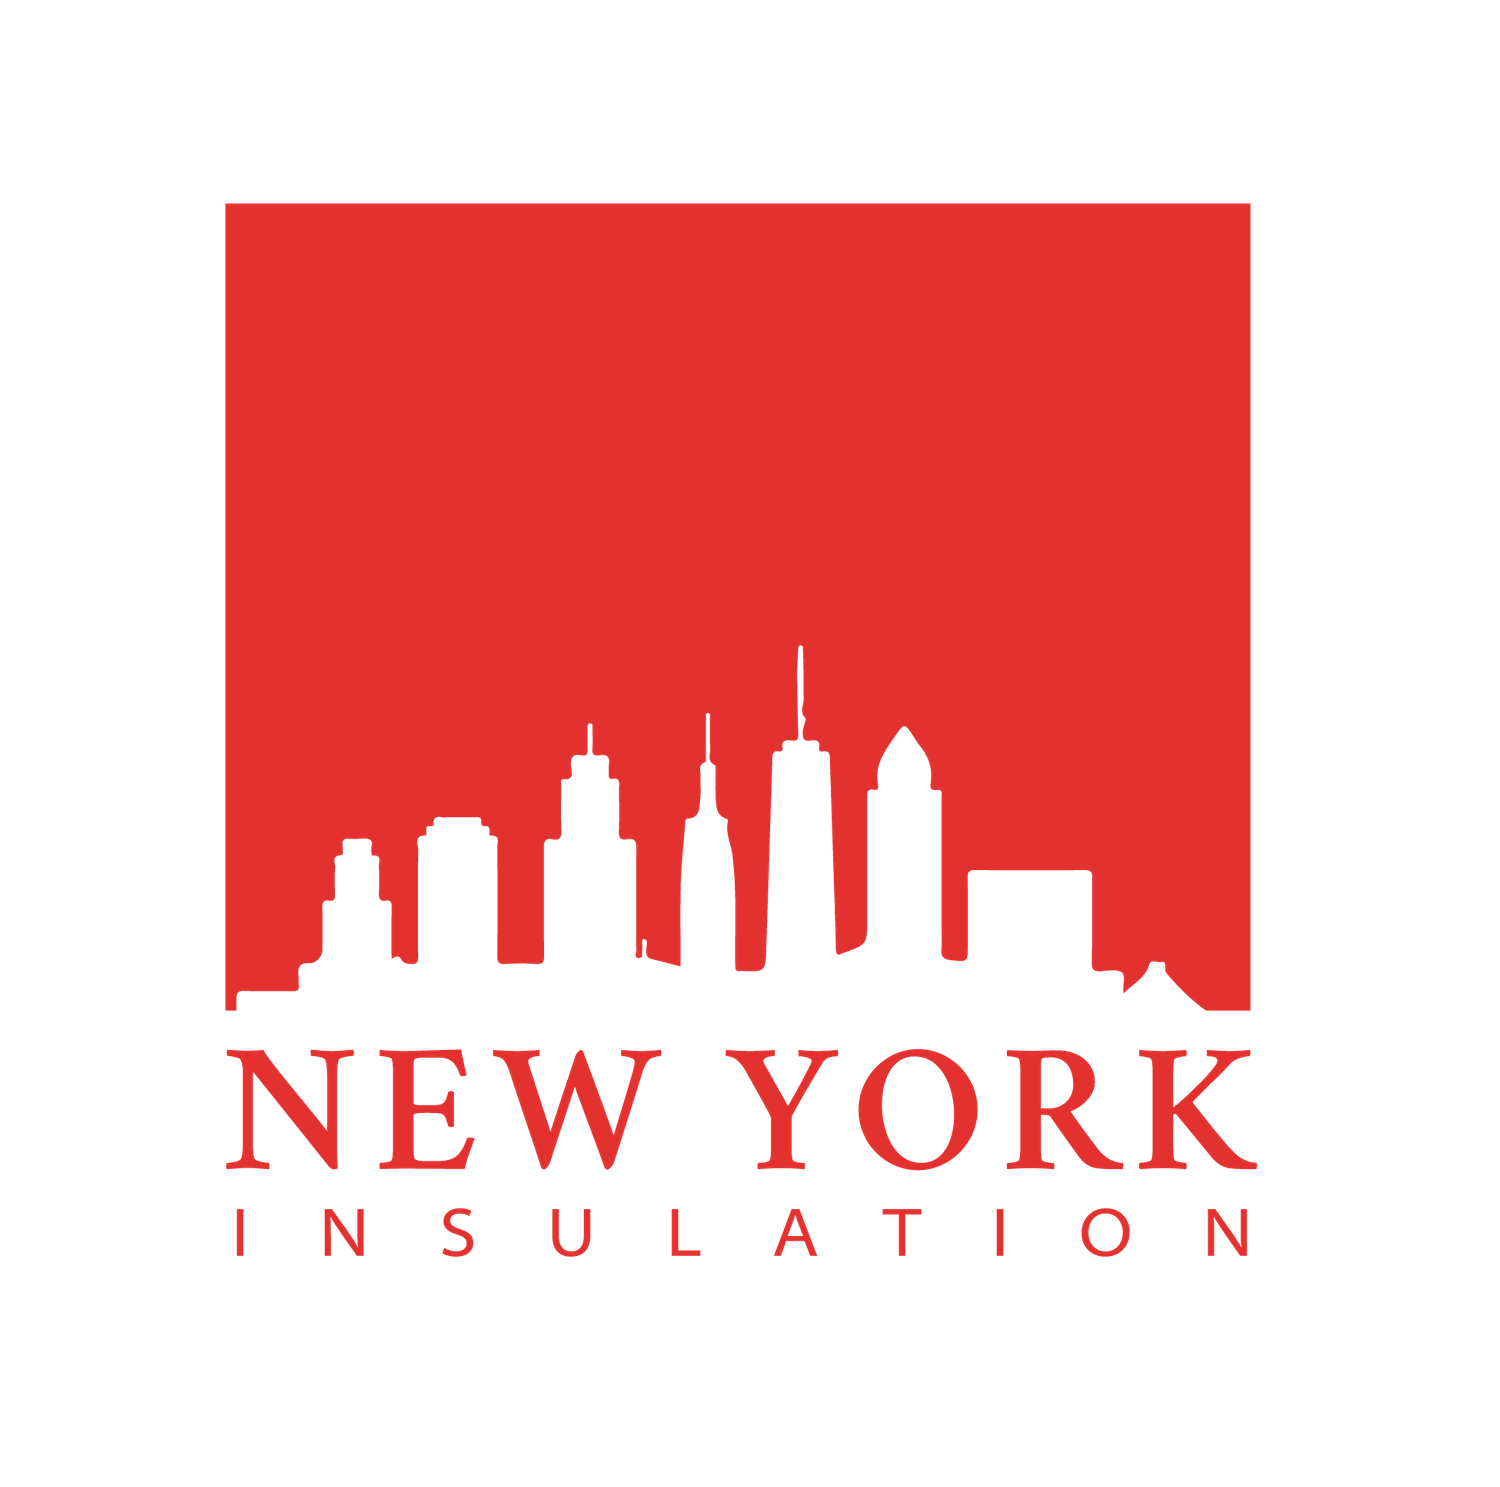 New York Insulation